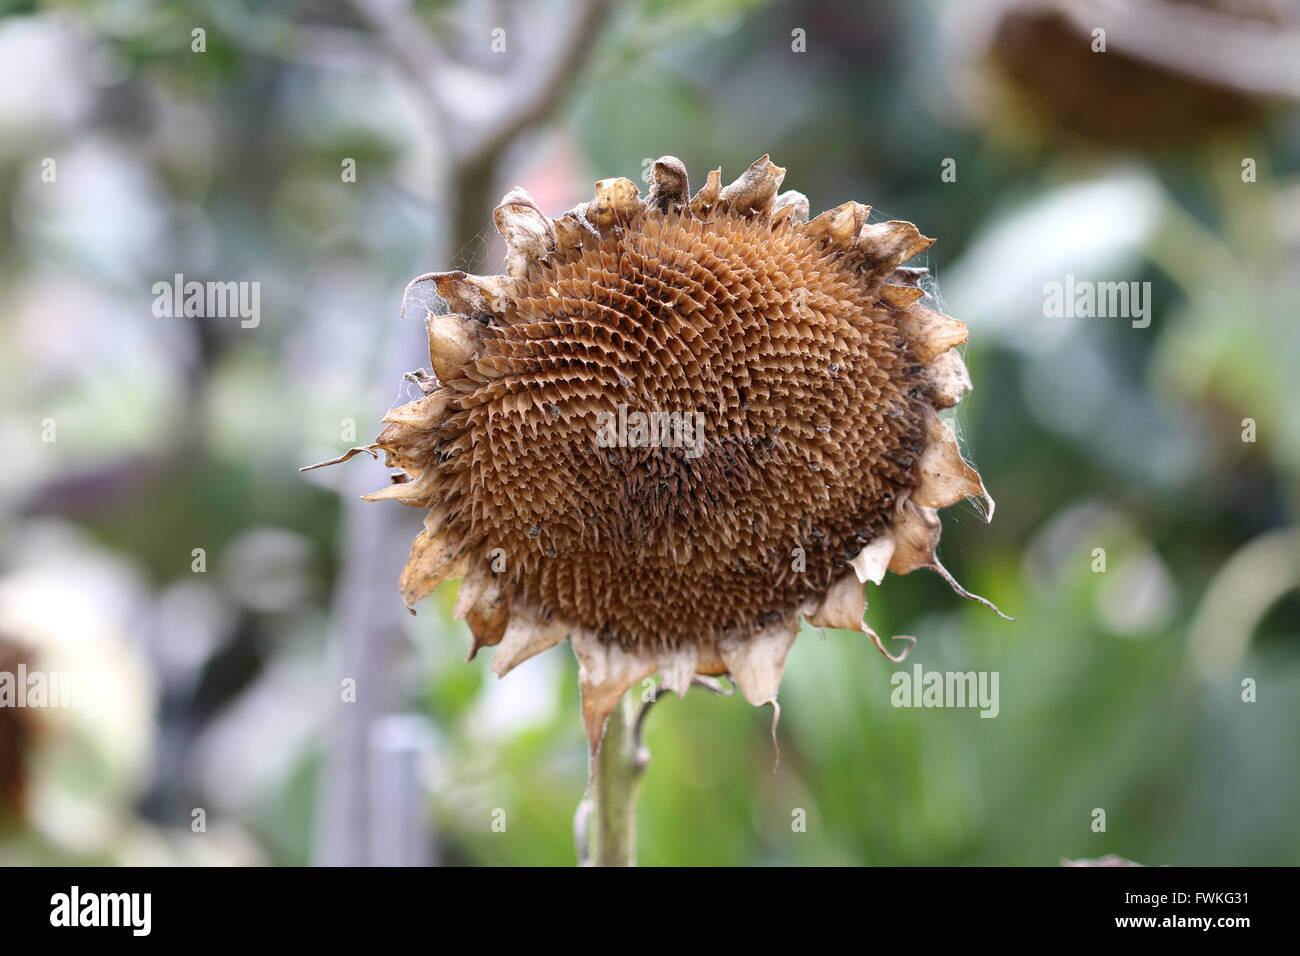 Half eaten Dried sunflower seeds crown Stock Photo